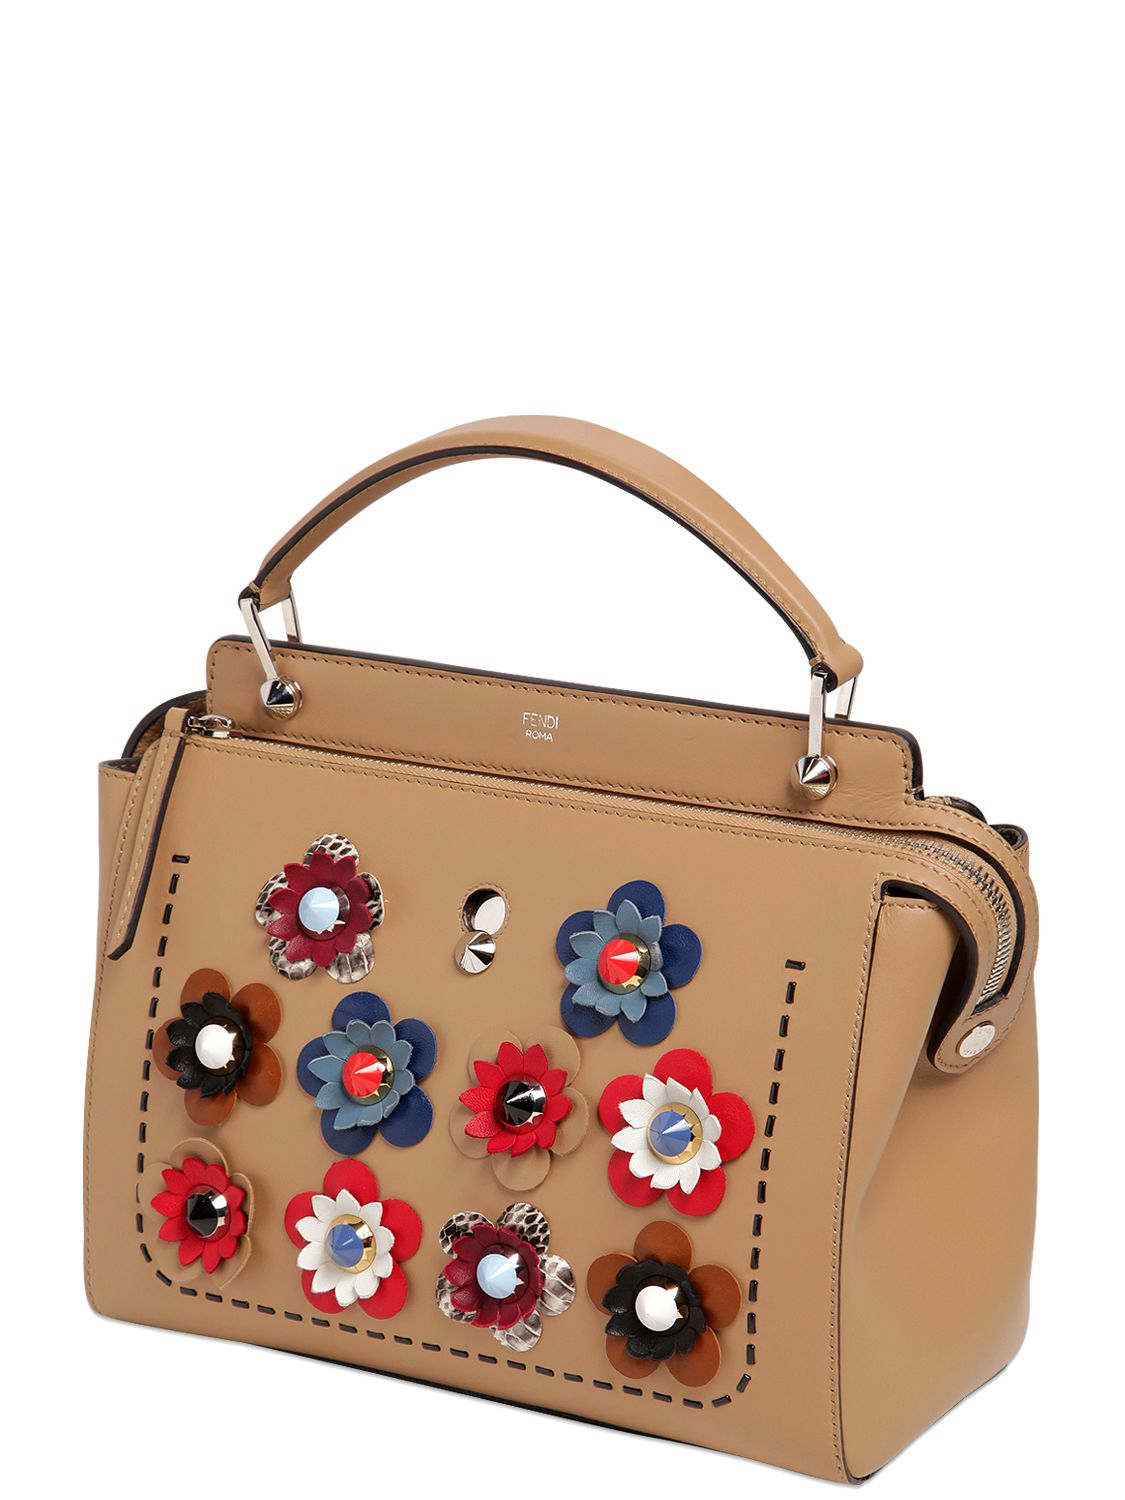 Fendi .com Flower Appliqués Leather Bag in Beige (Natural) - Lyst